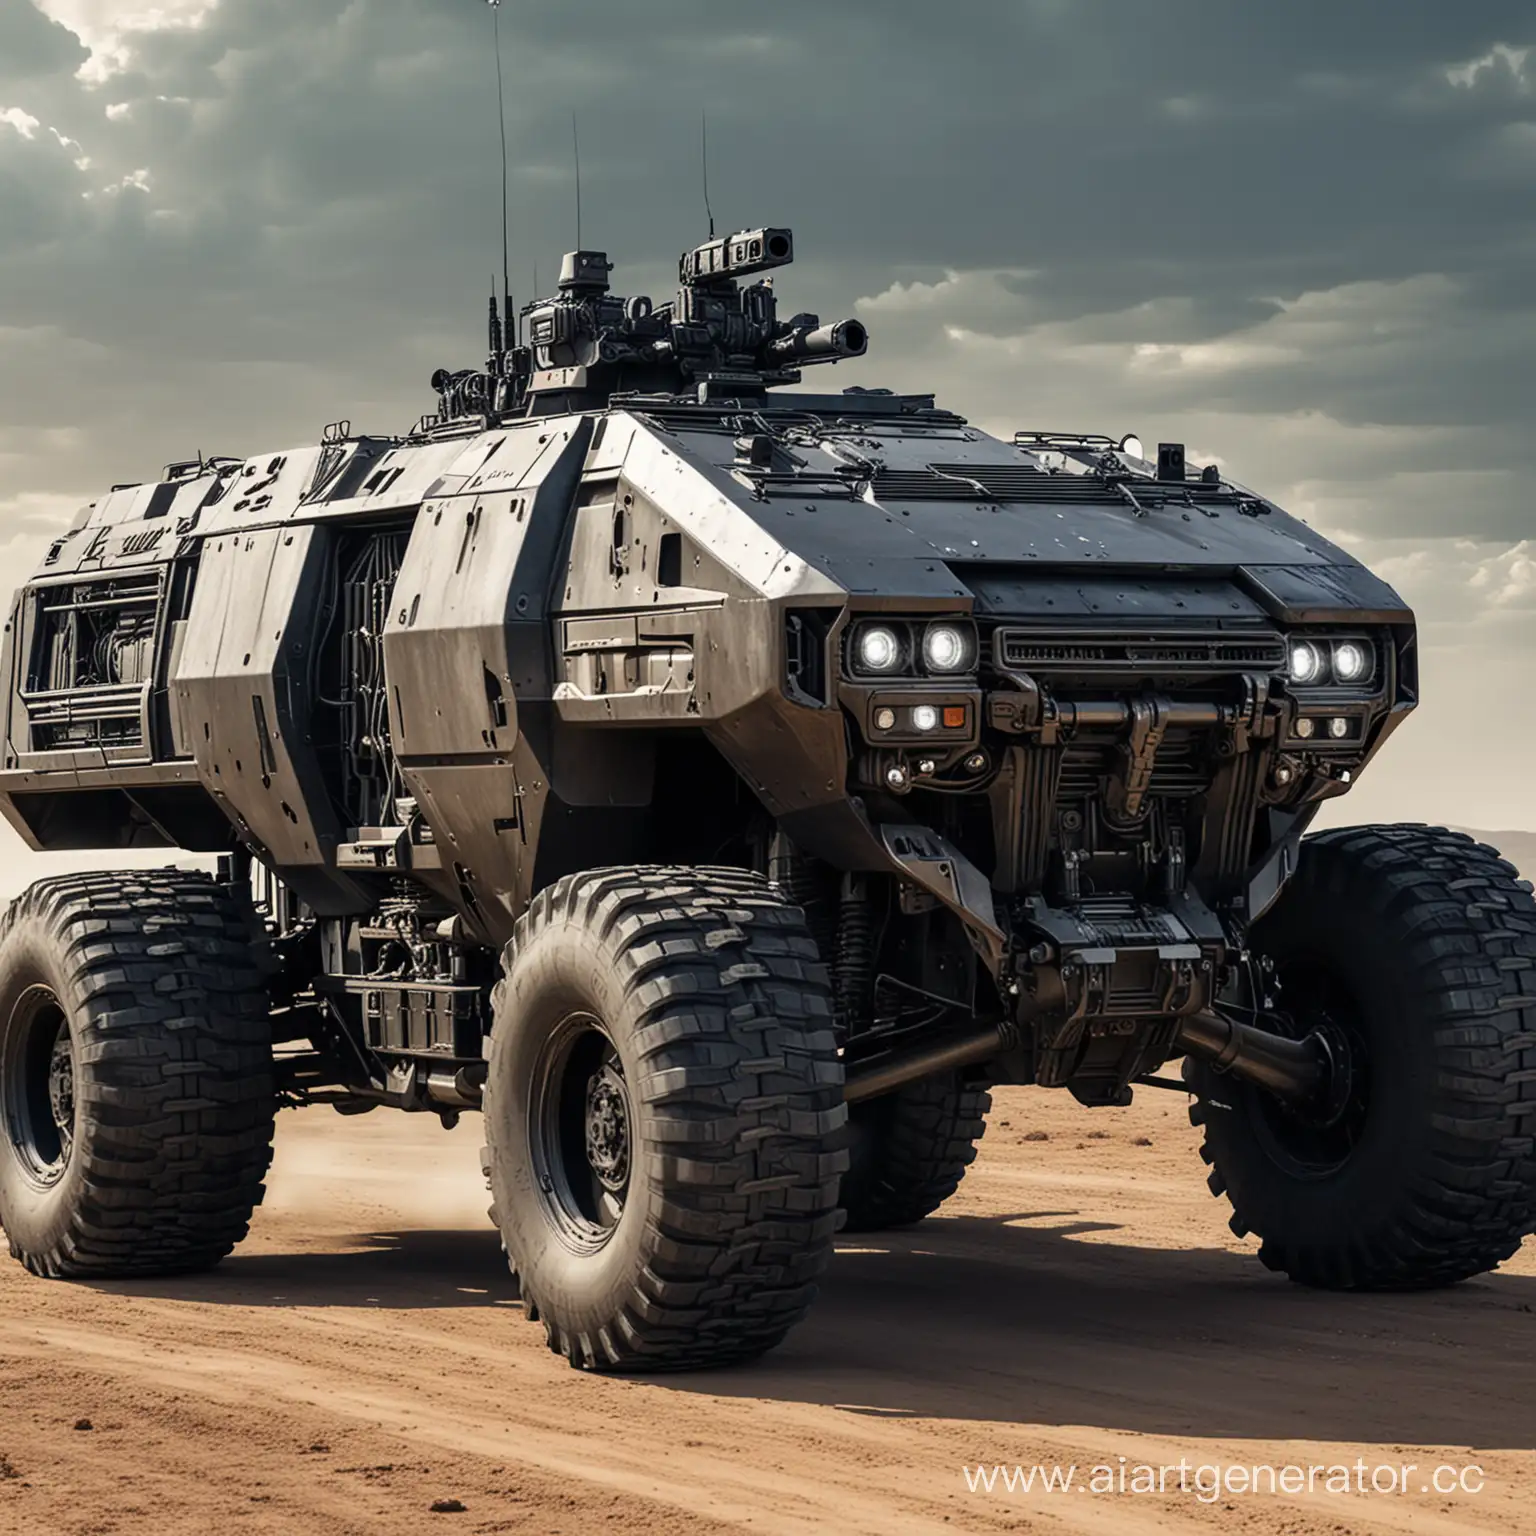 Futuristic-Terminator-Armored-Vehicle-in-Apocalyptic-Landscape